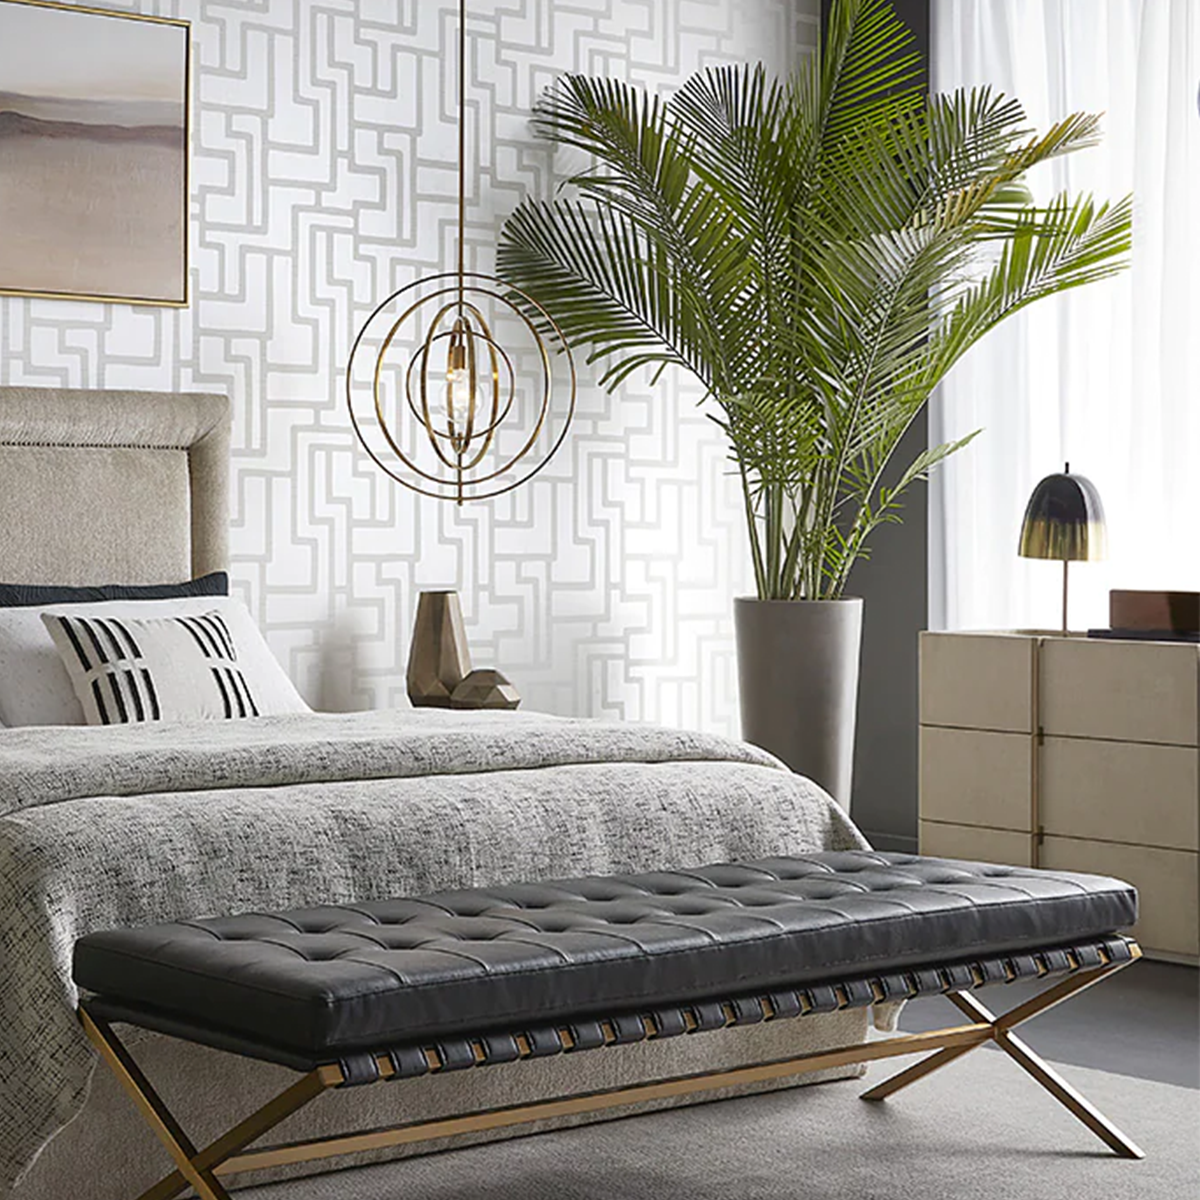 Jamille Dresser by Sunpan inside a classy and luxury Bedroom